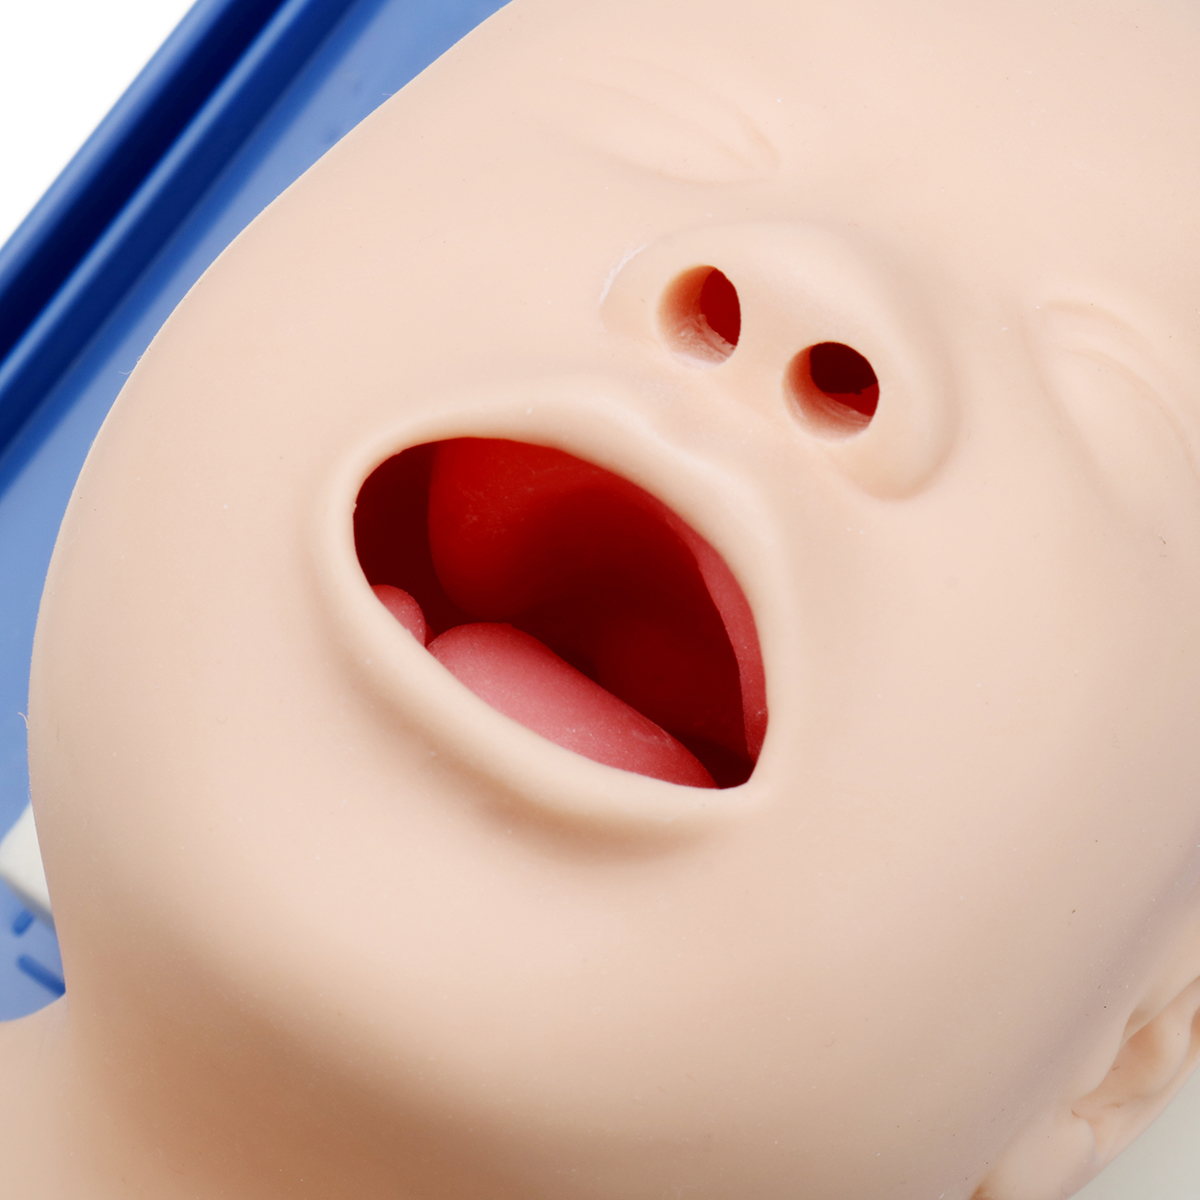 Intubation Manikin Study Teaching Model Baby Infant Airway Management Trainer Medical Model 17